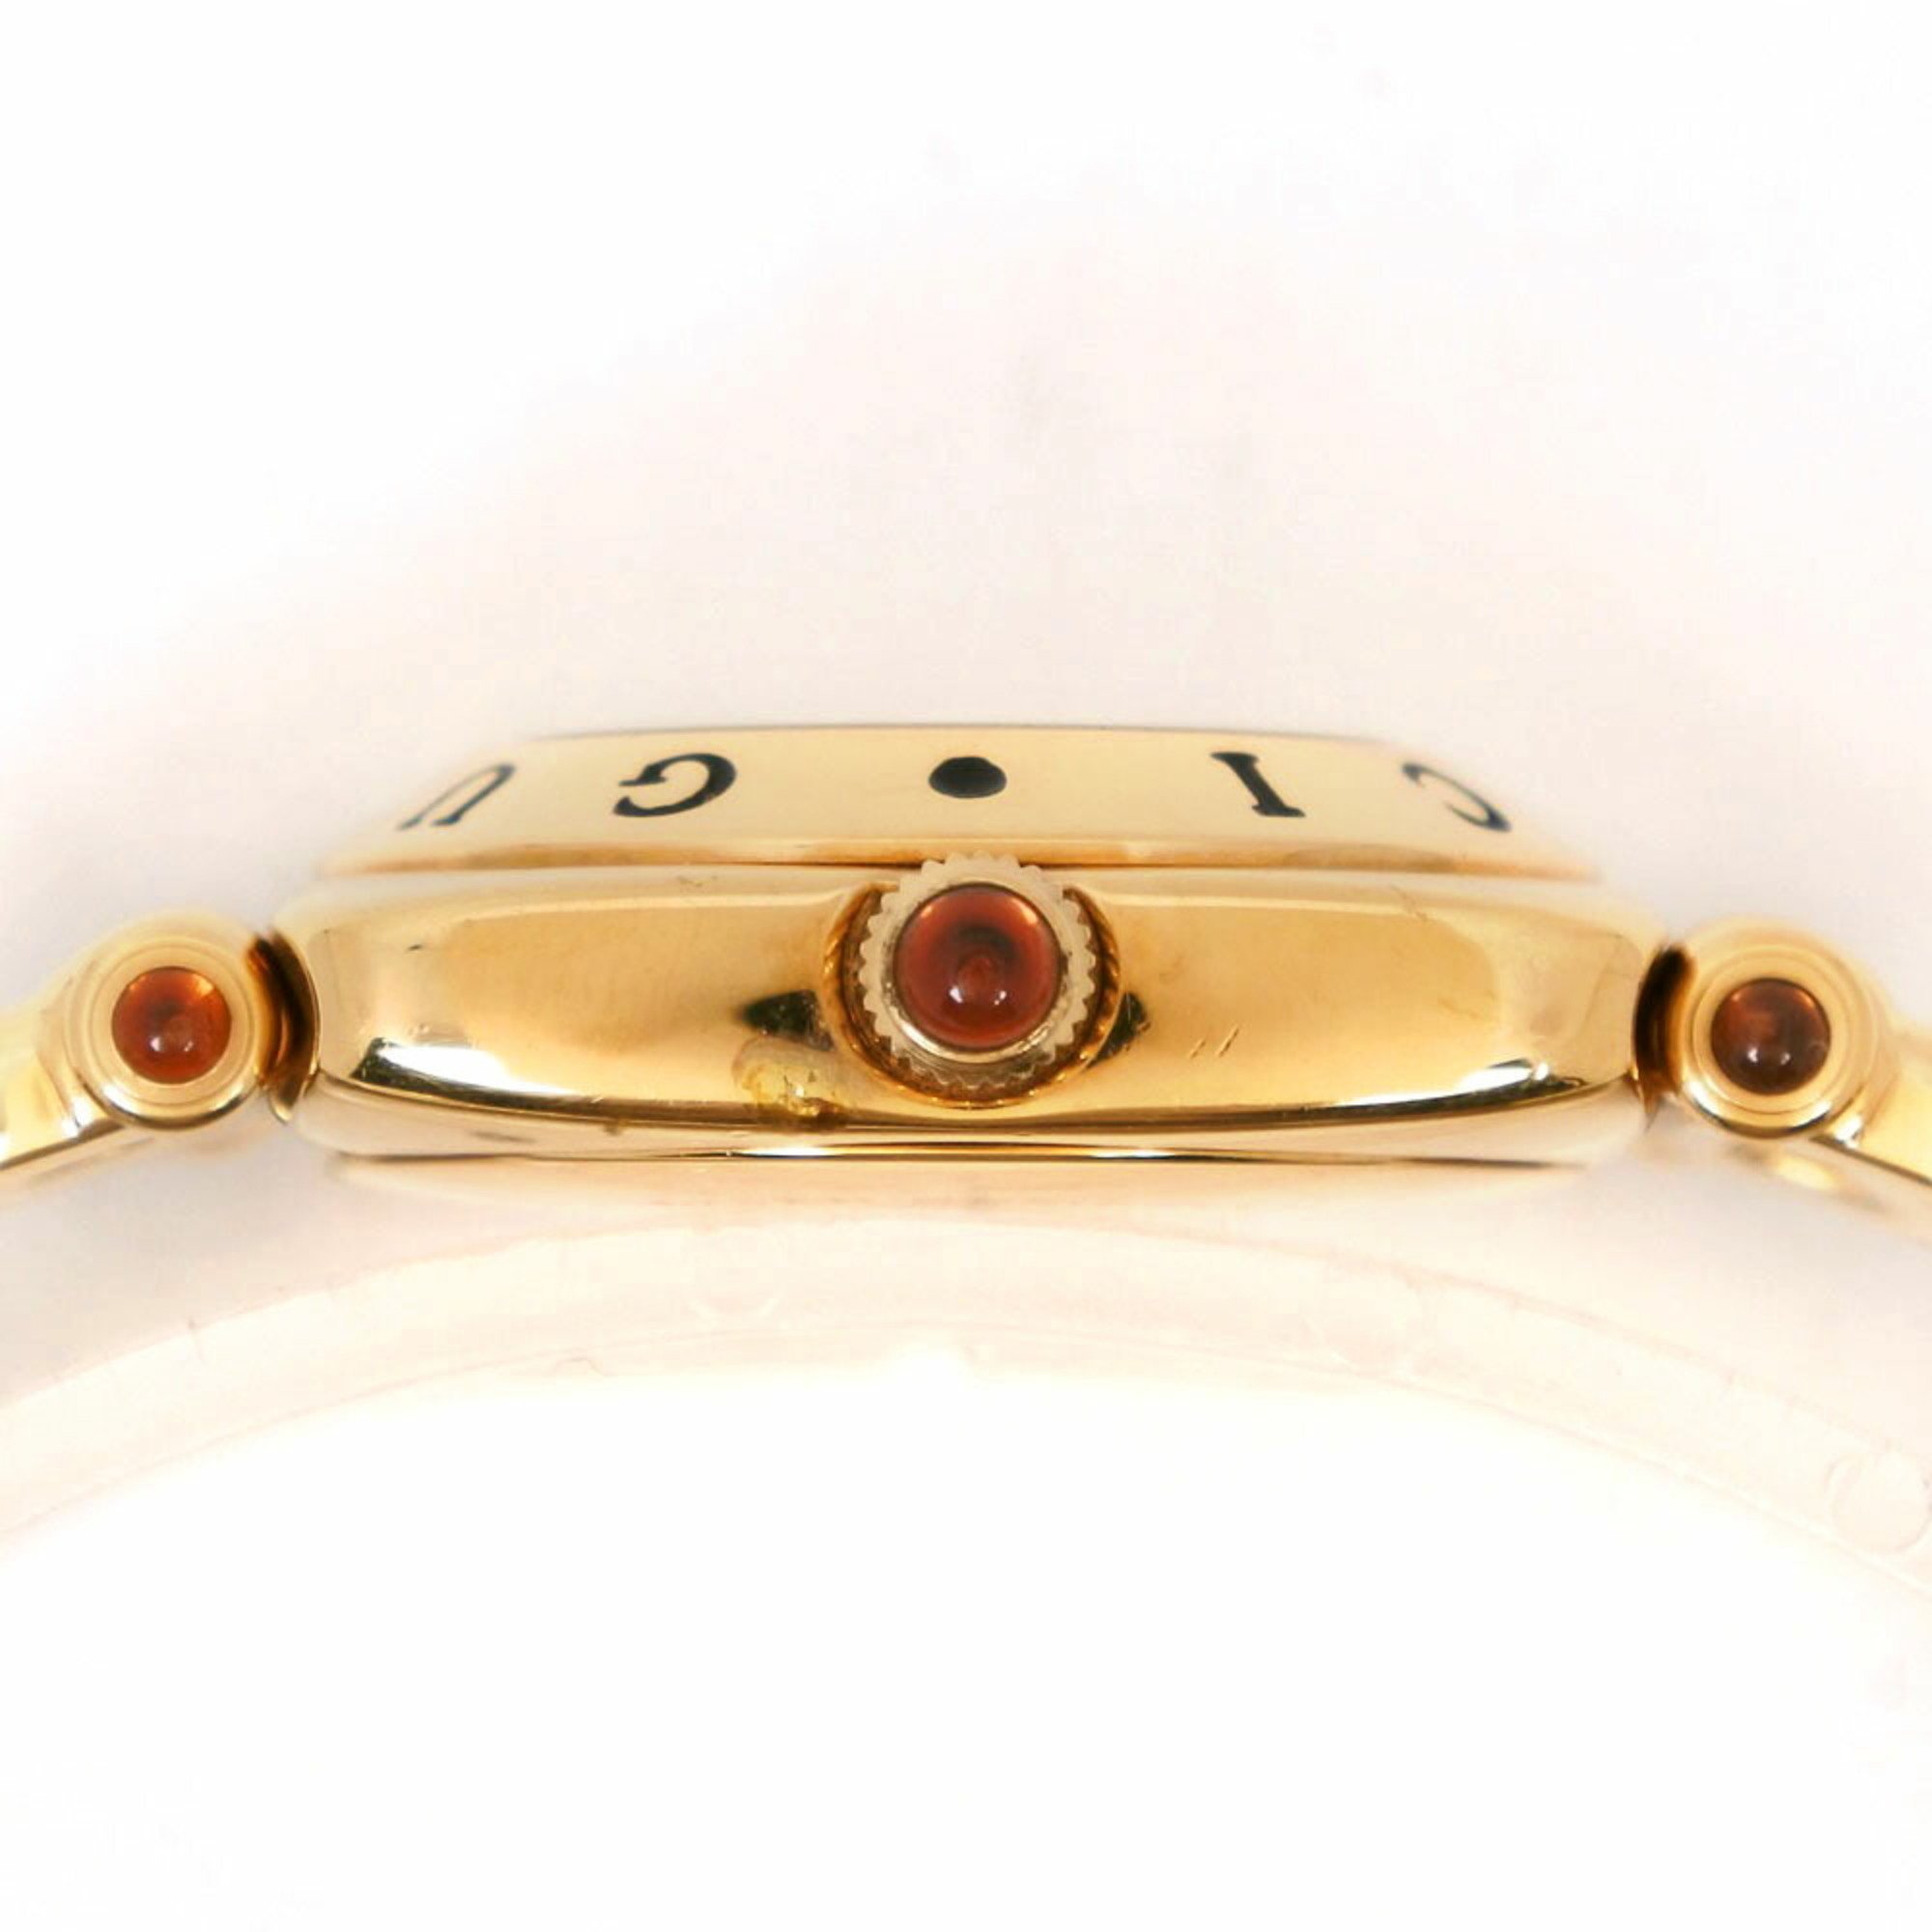 Gucci Horsebit Watch 6300L Gold Plated x Leather Quartz Analog Display Dial Women's I210123013